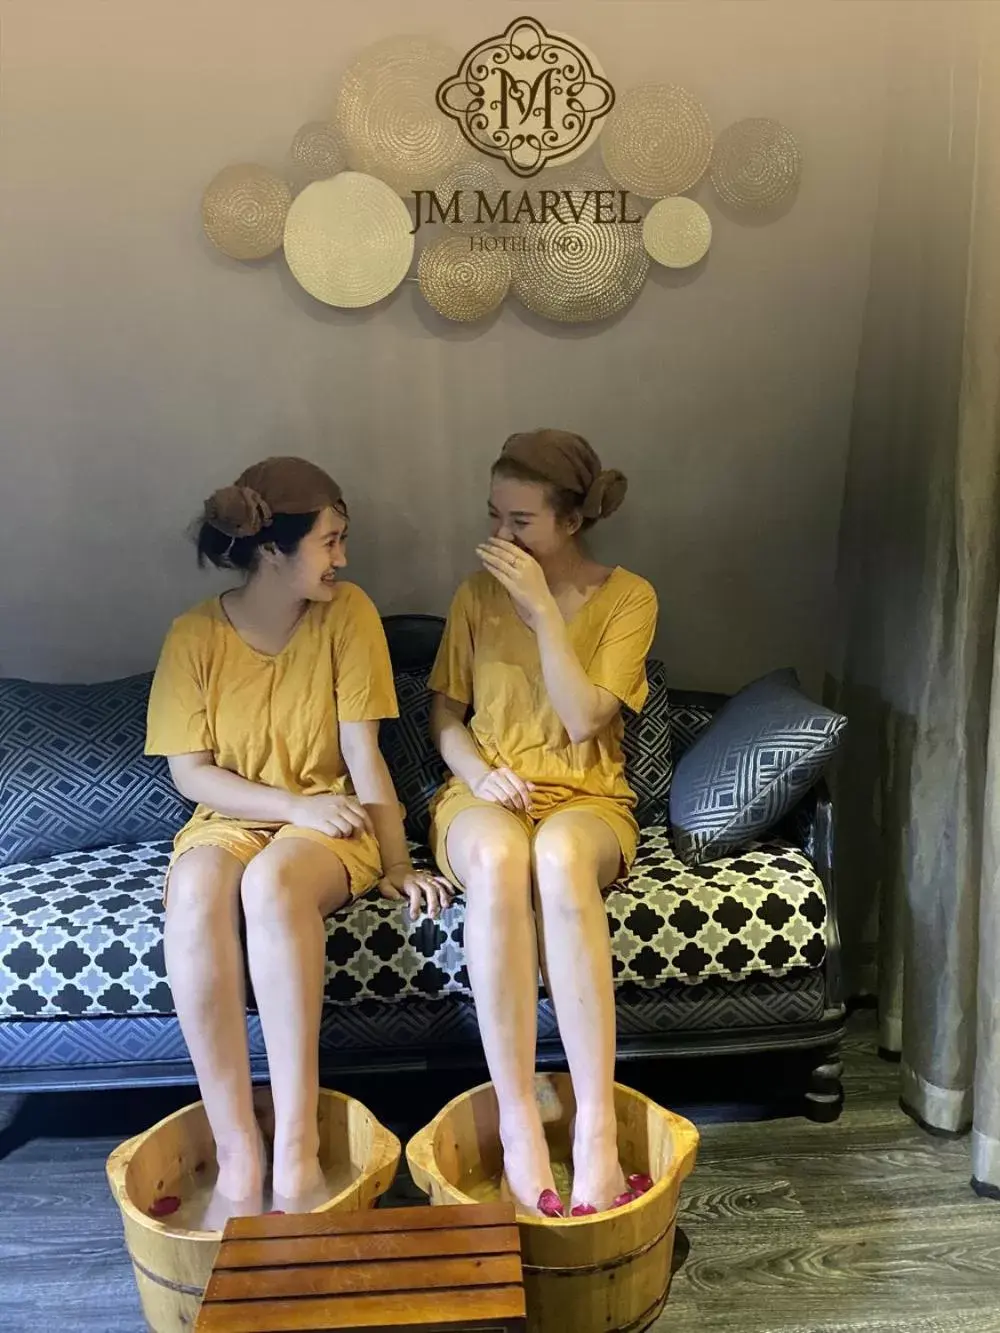 Massage in JM Marvel Hotel & Spa